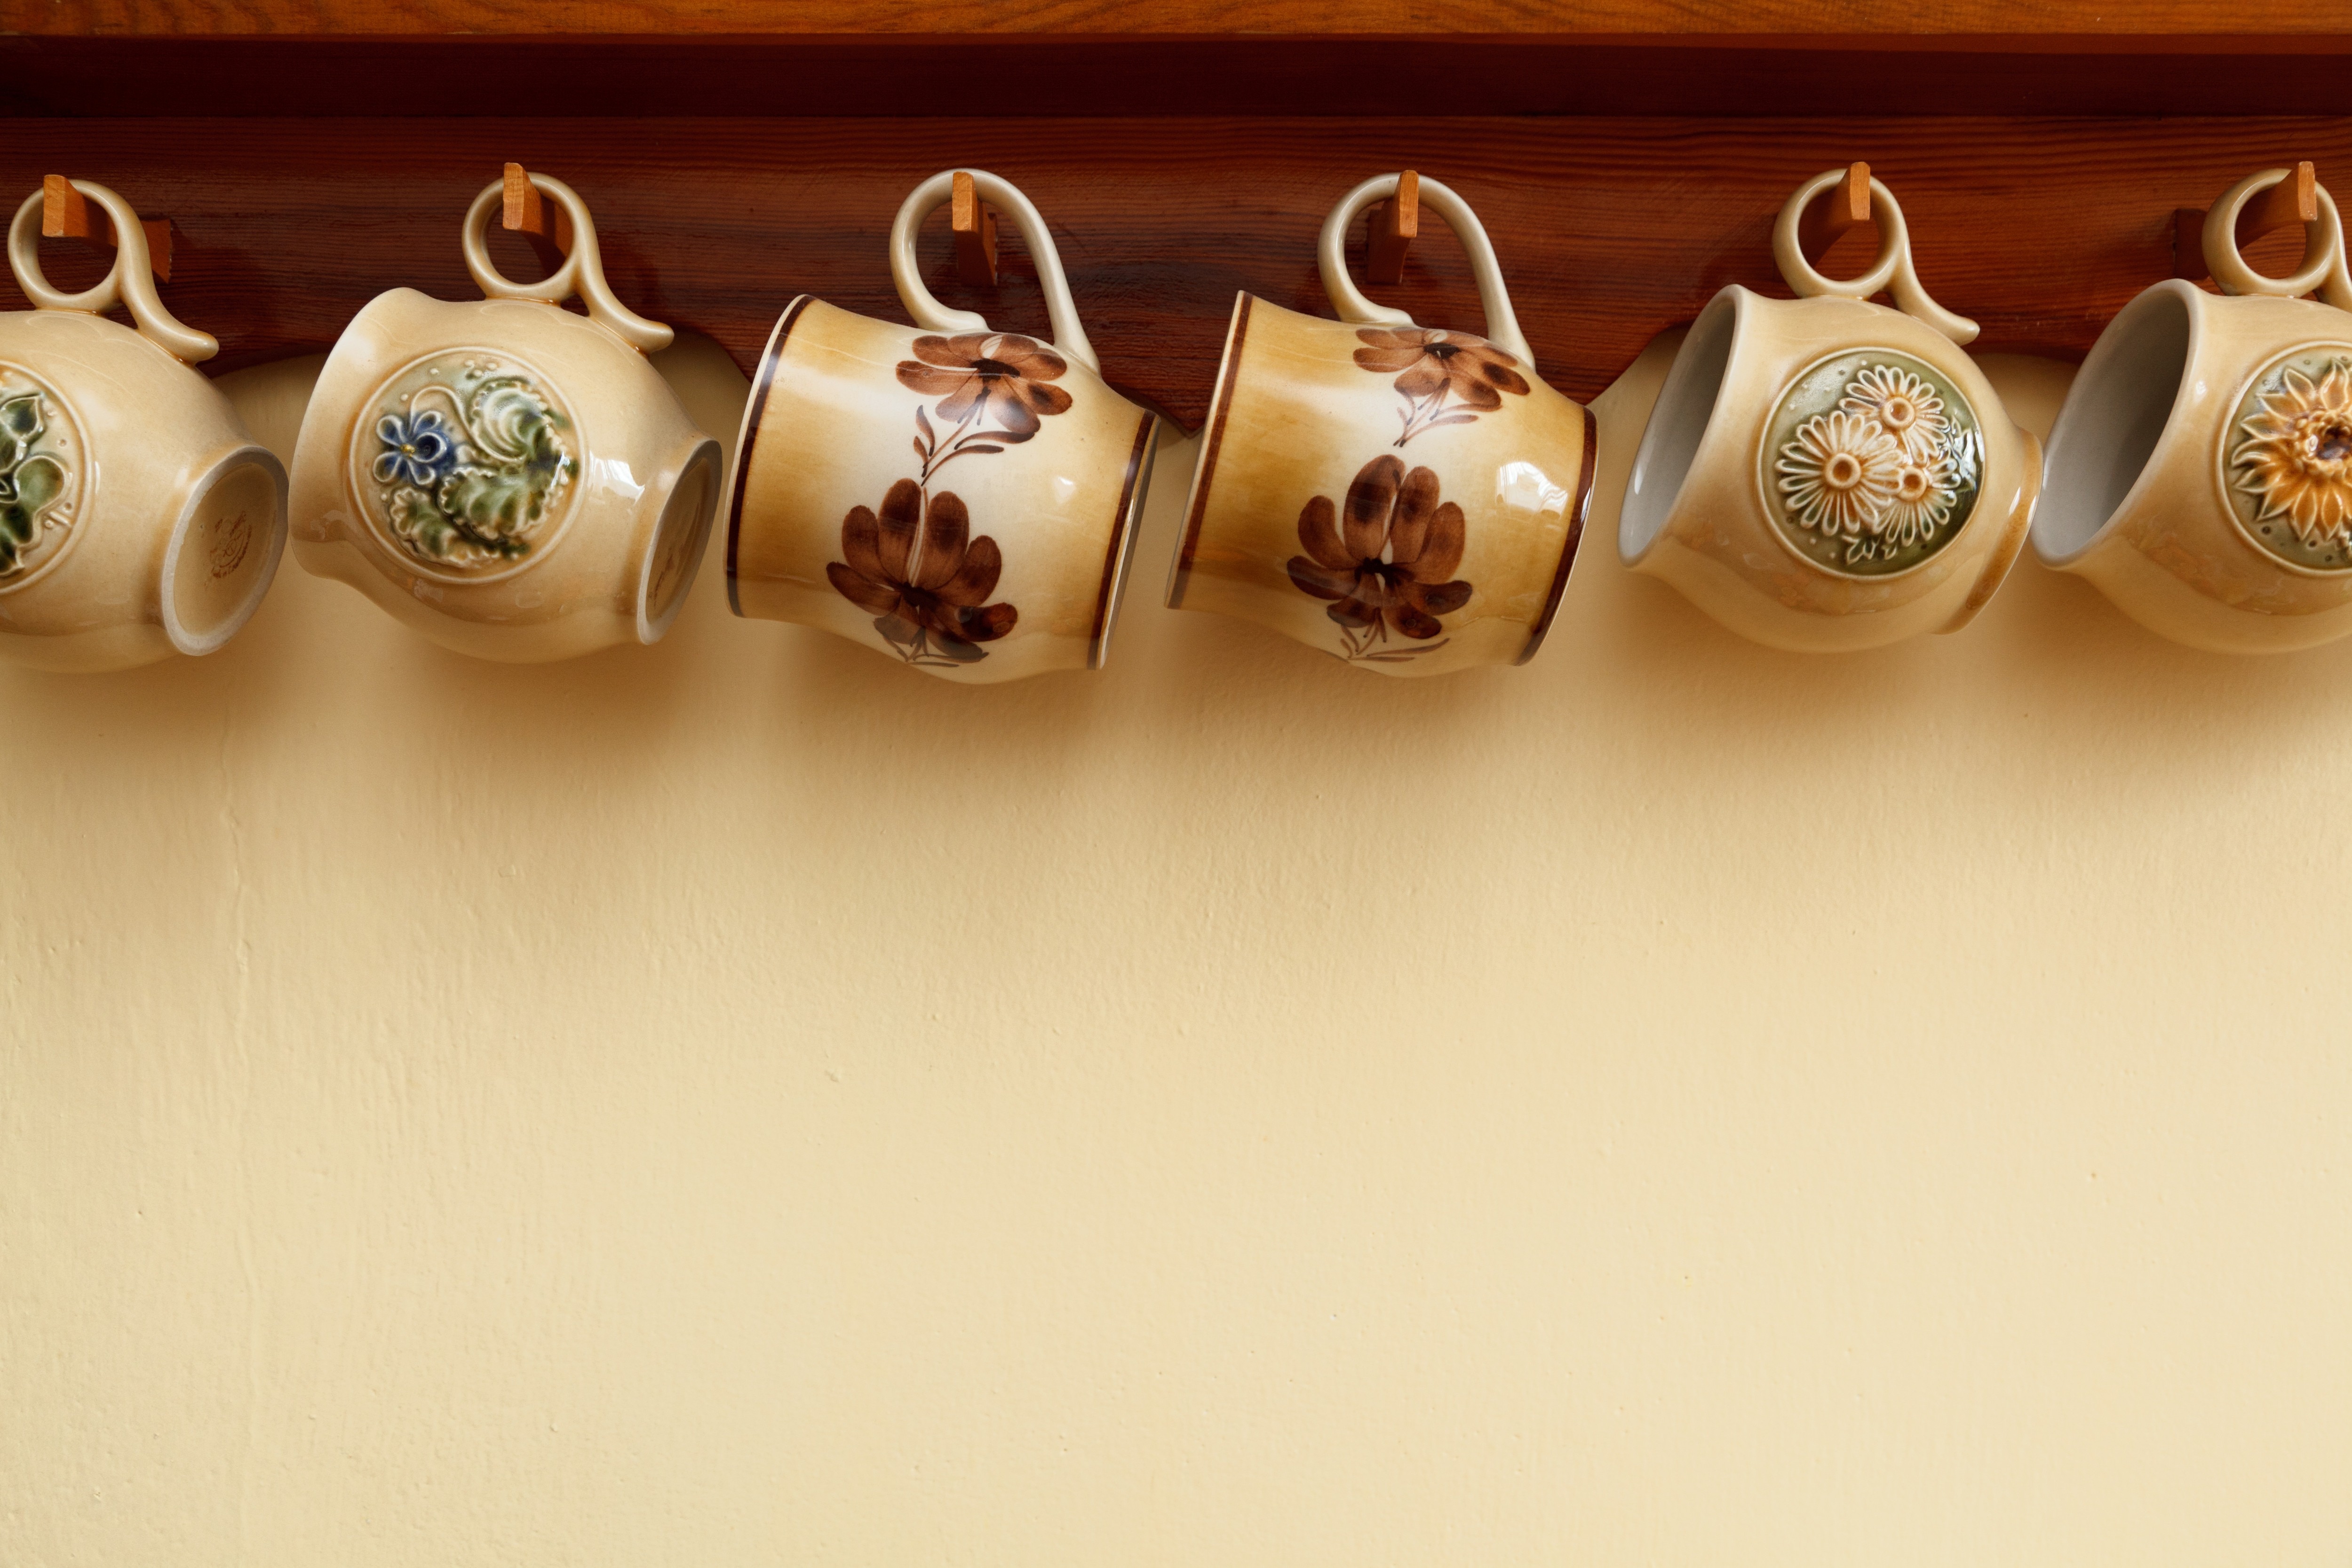 6 ceramic mugs